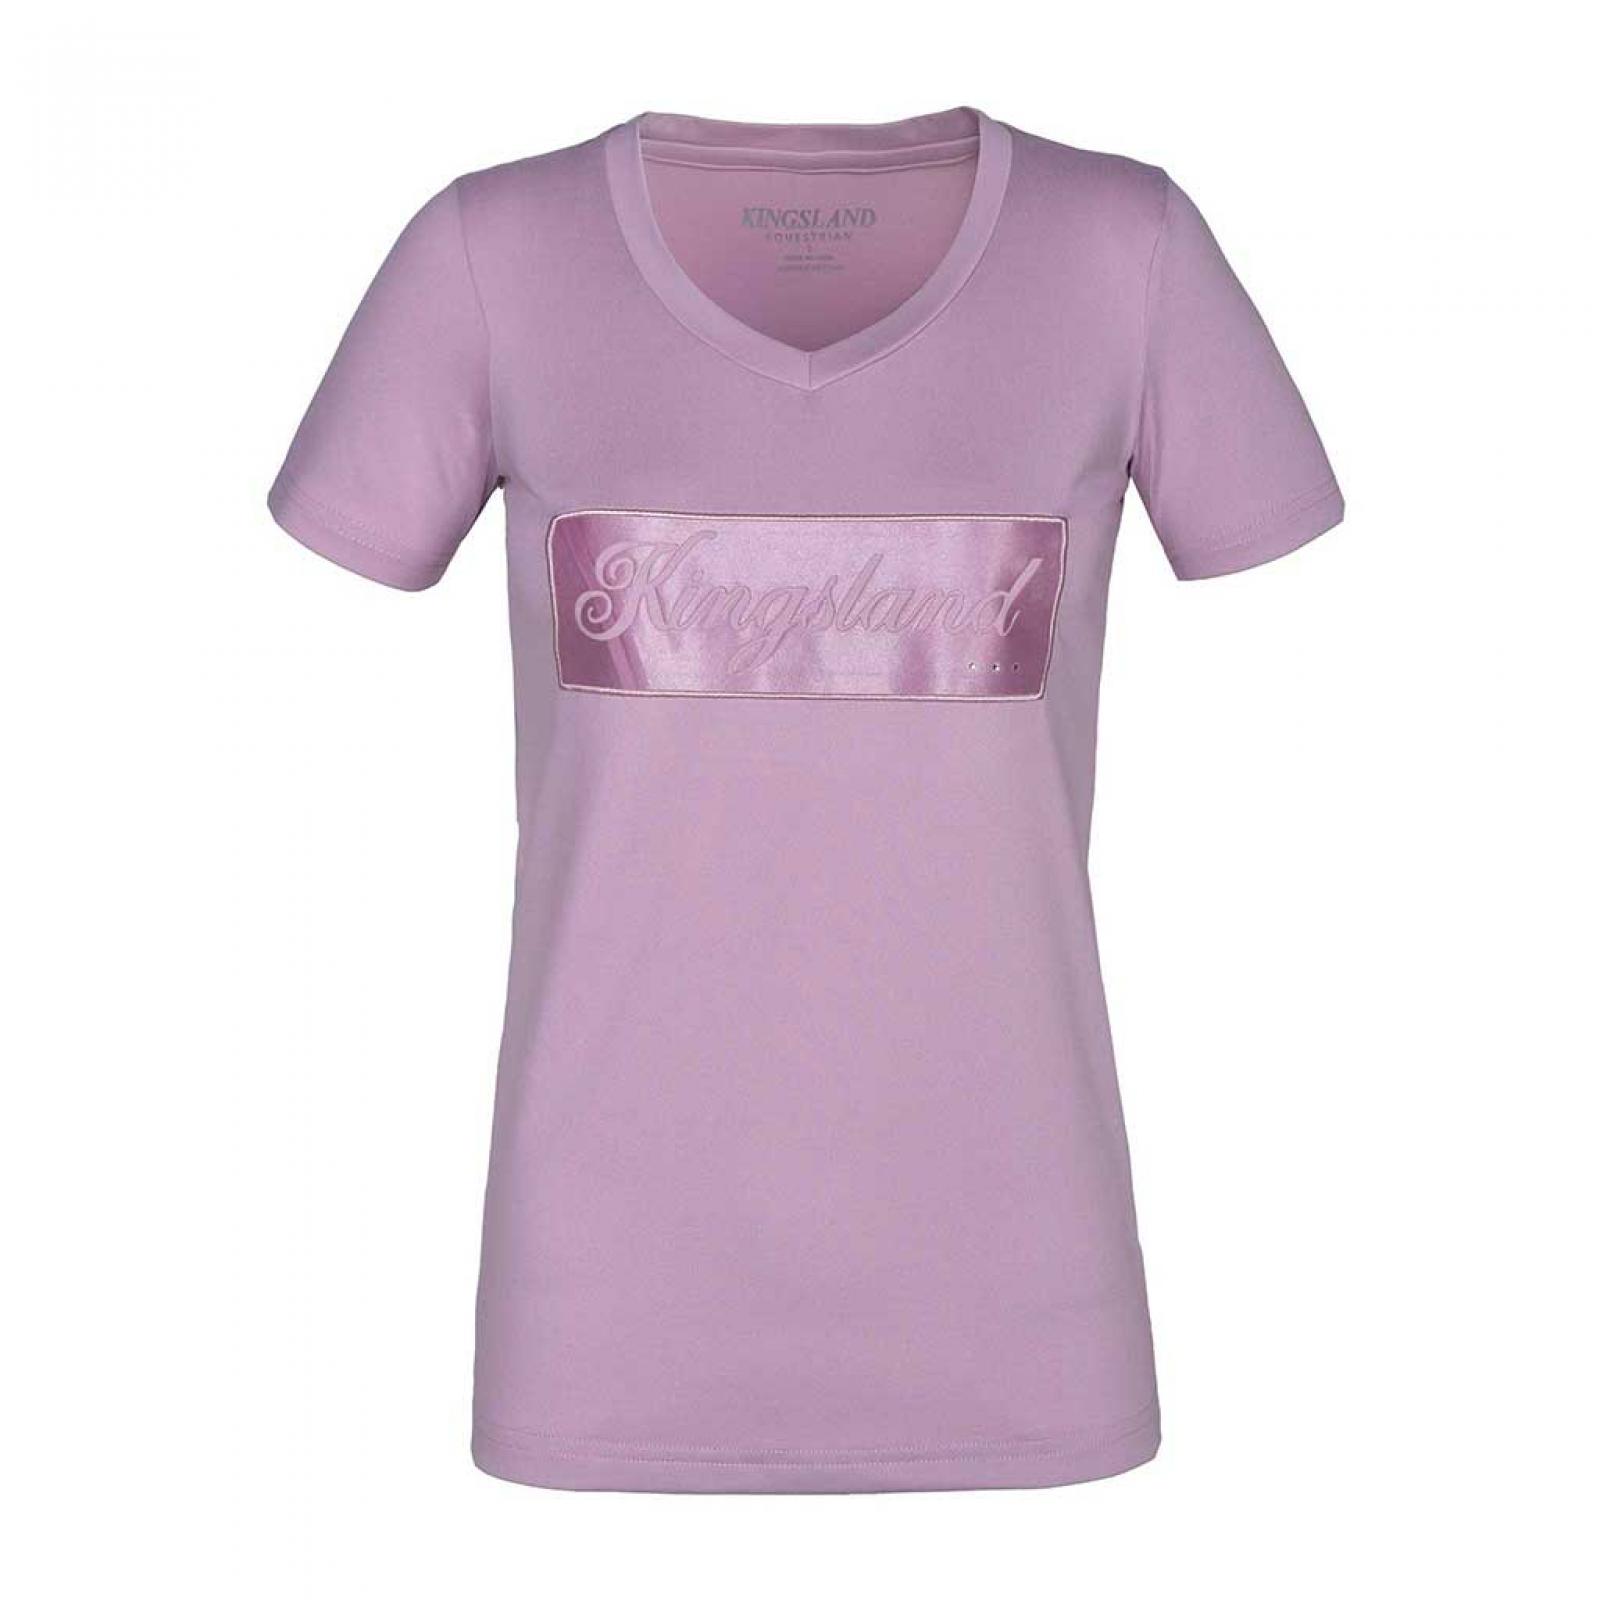 Kingsland Luna Pink T-shirt 